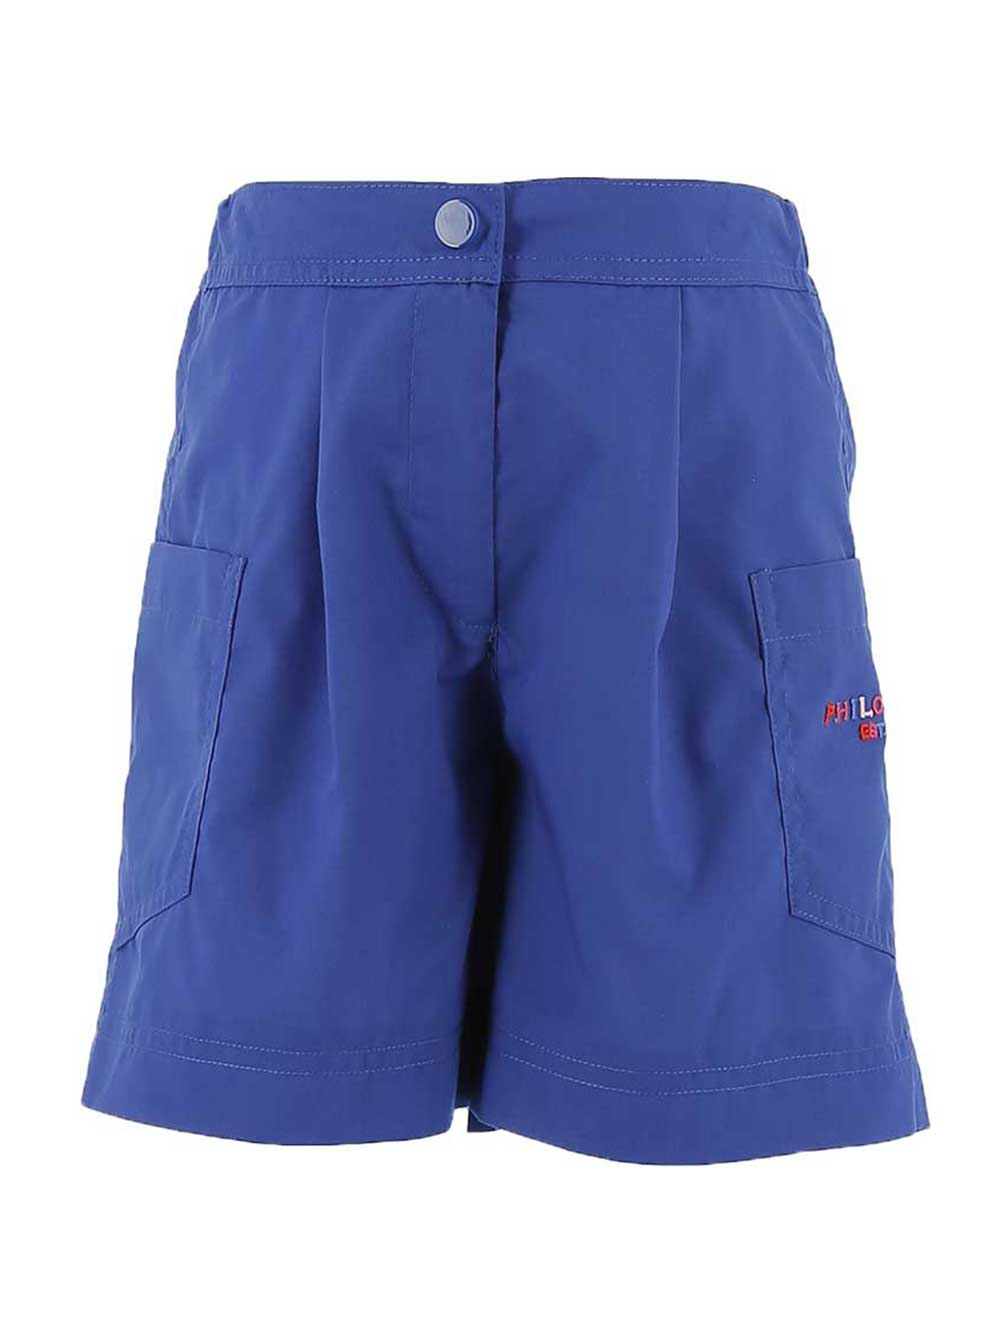 Blue Pocket Philosophy Shorts